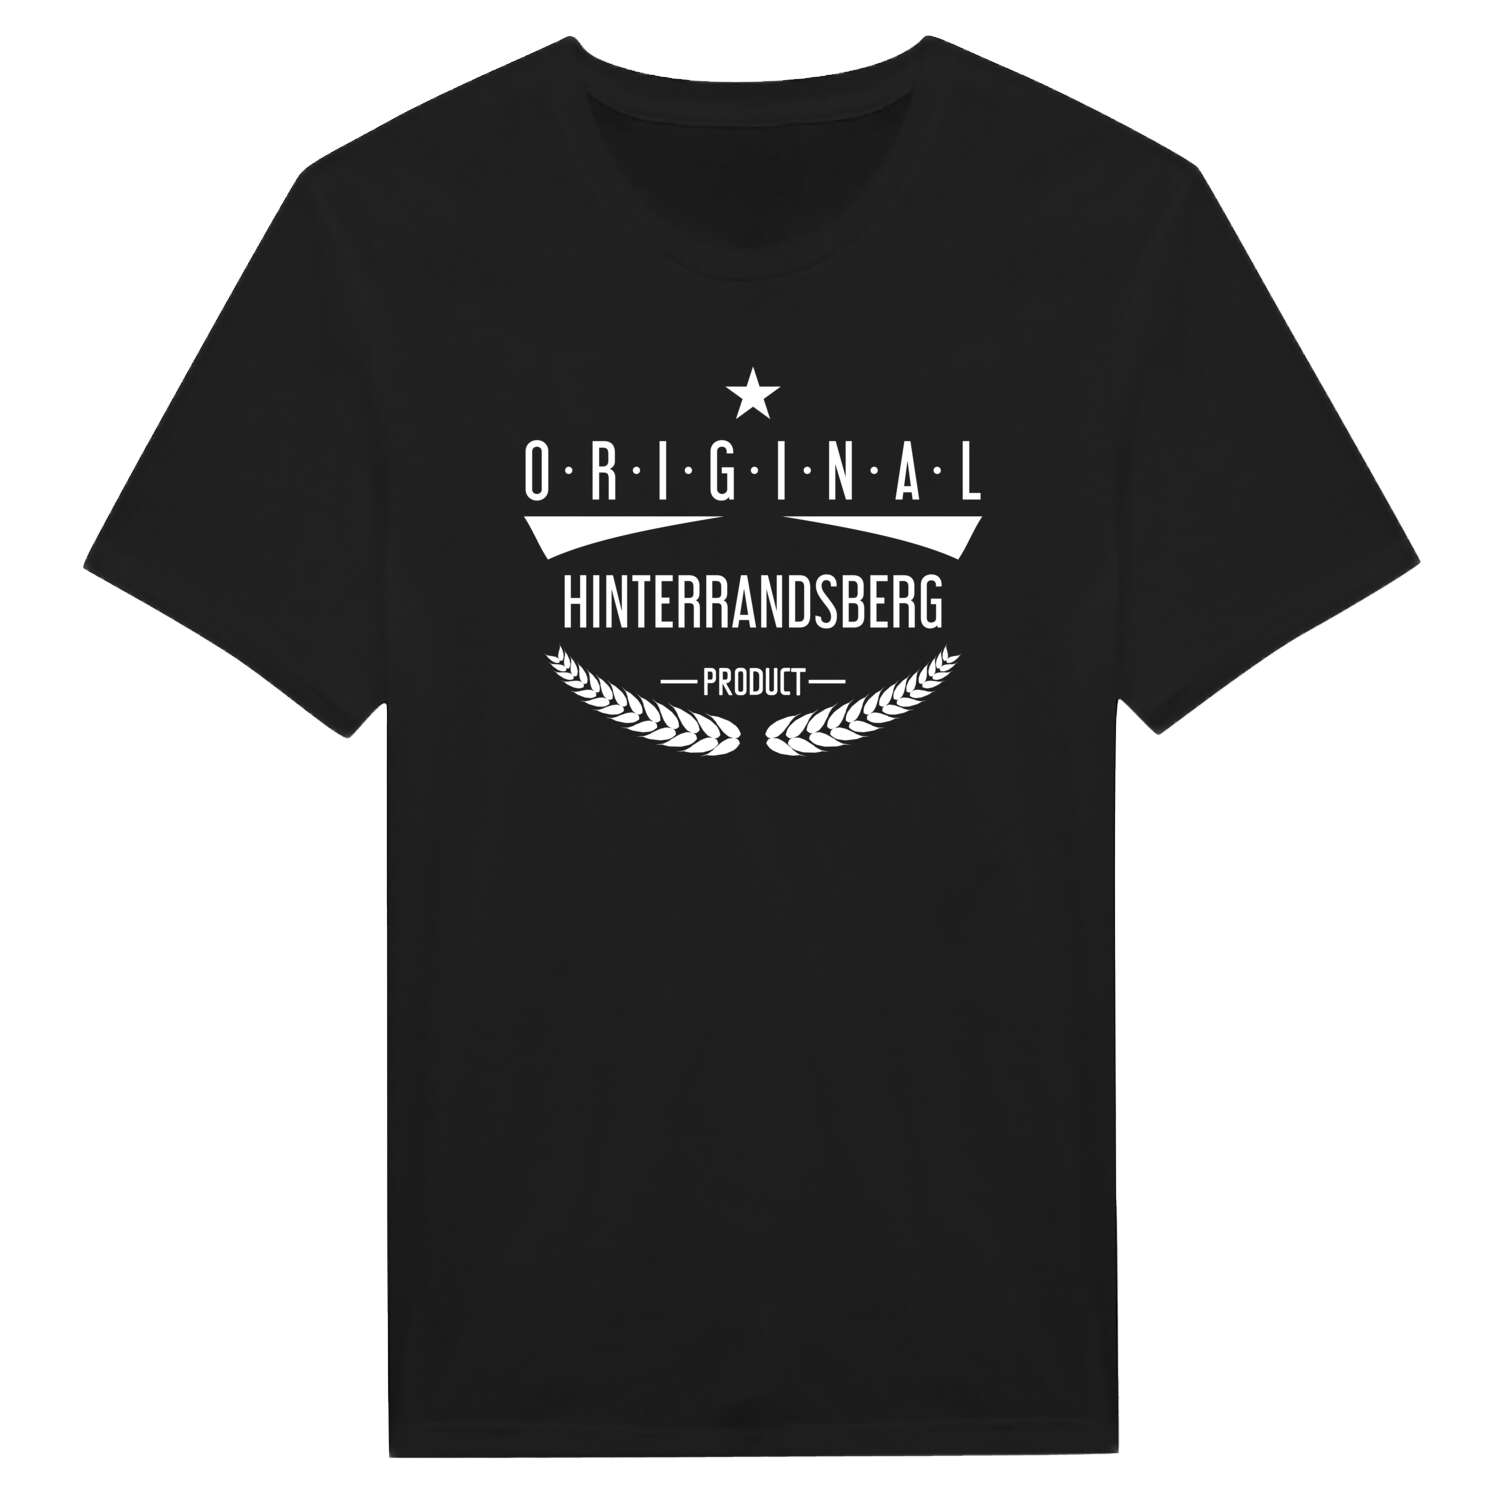 Hinterrandsberg T-Shirt »Original Product«